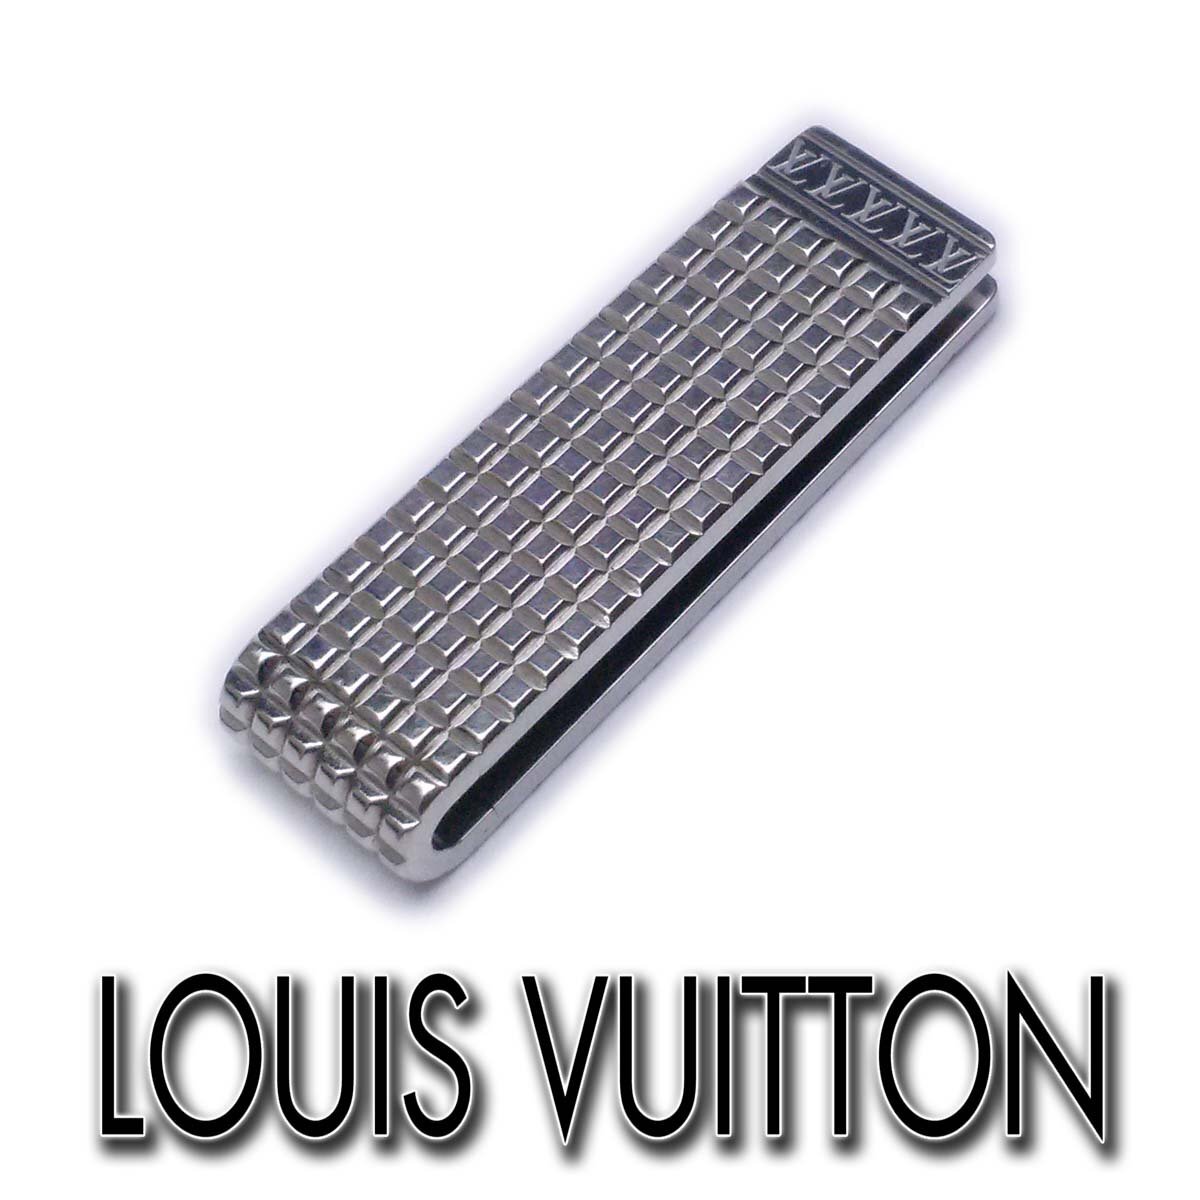 1 jpy [ super-beauty goods ] Louis Vuitton money clip M65061 bread sabi Eddie jito silver metal fittings waffle chocolate bar ap8949[ one jpy start ]